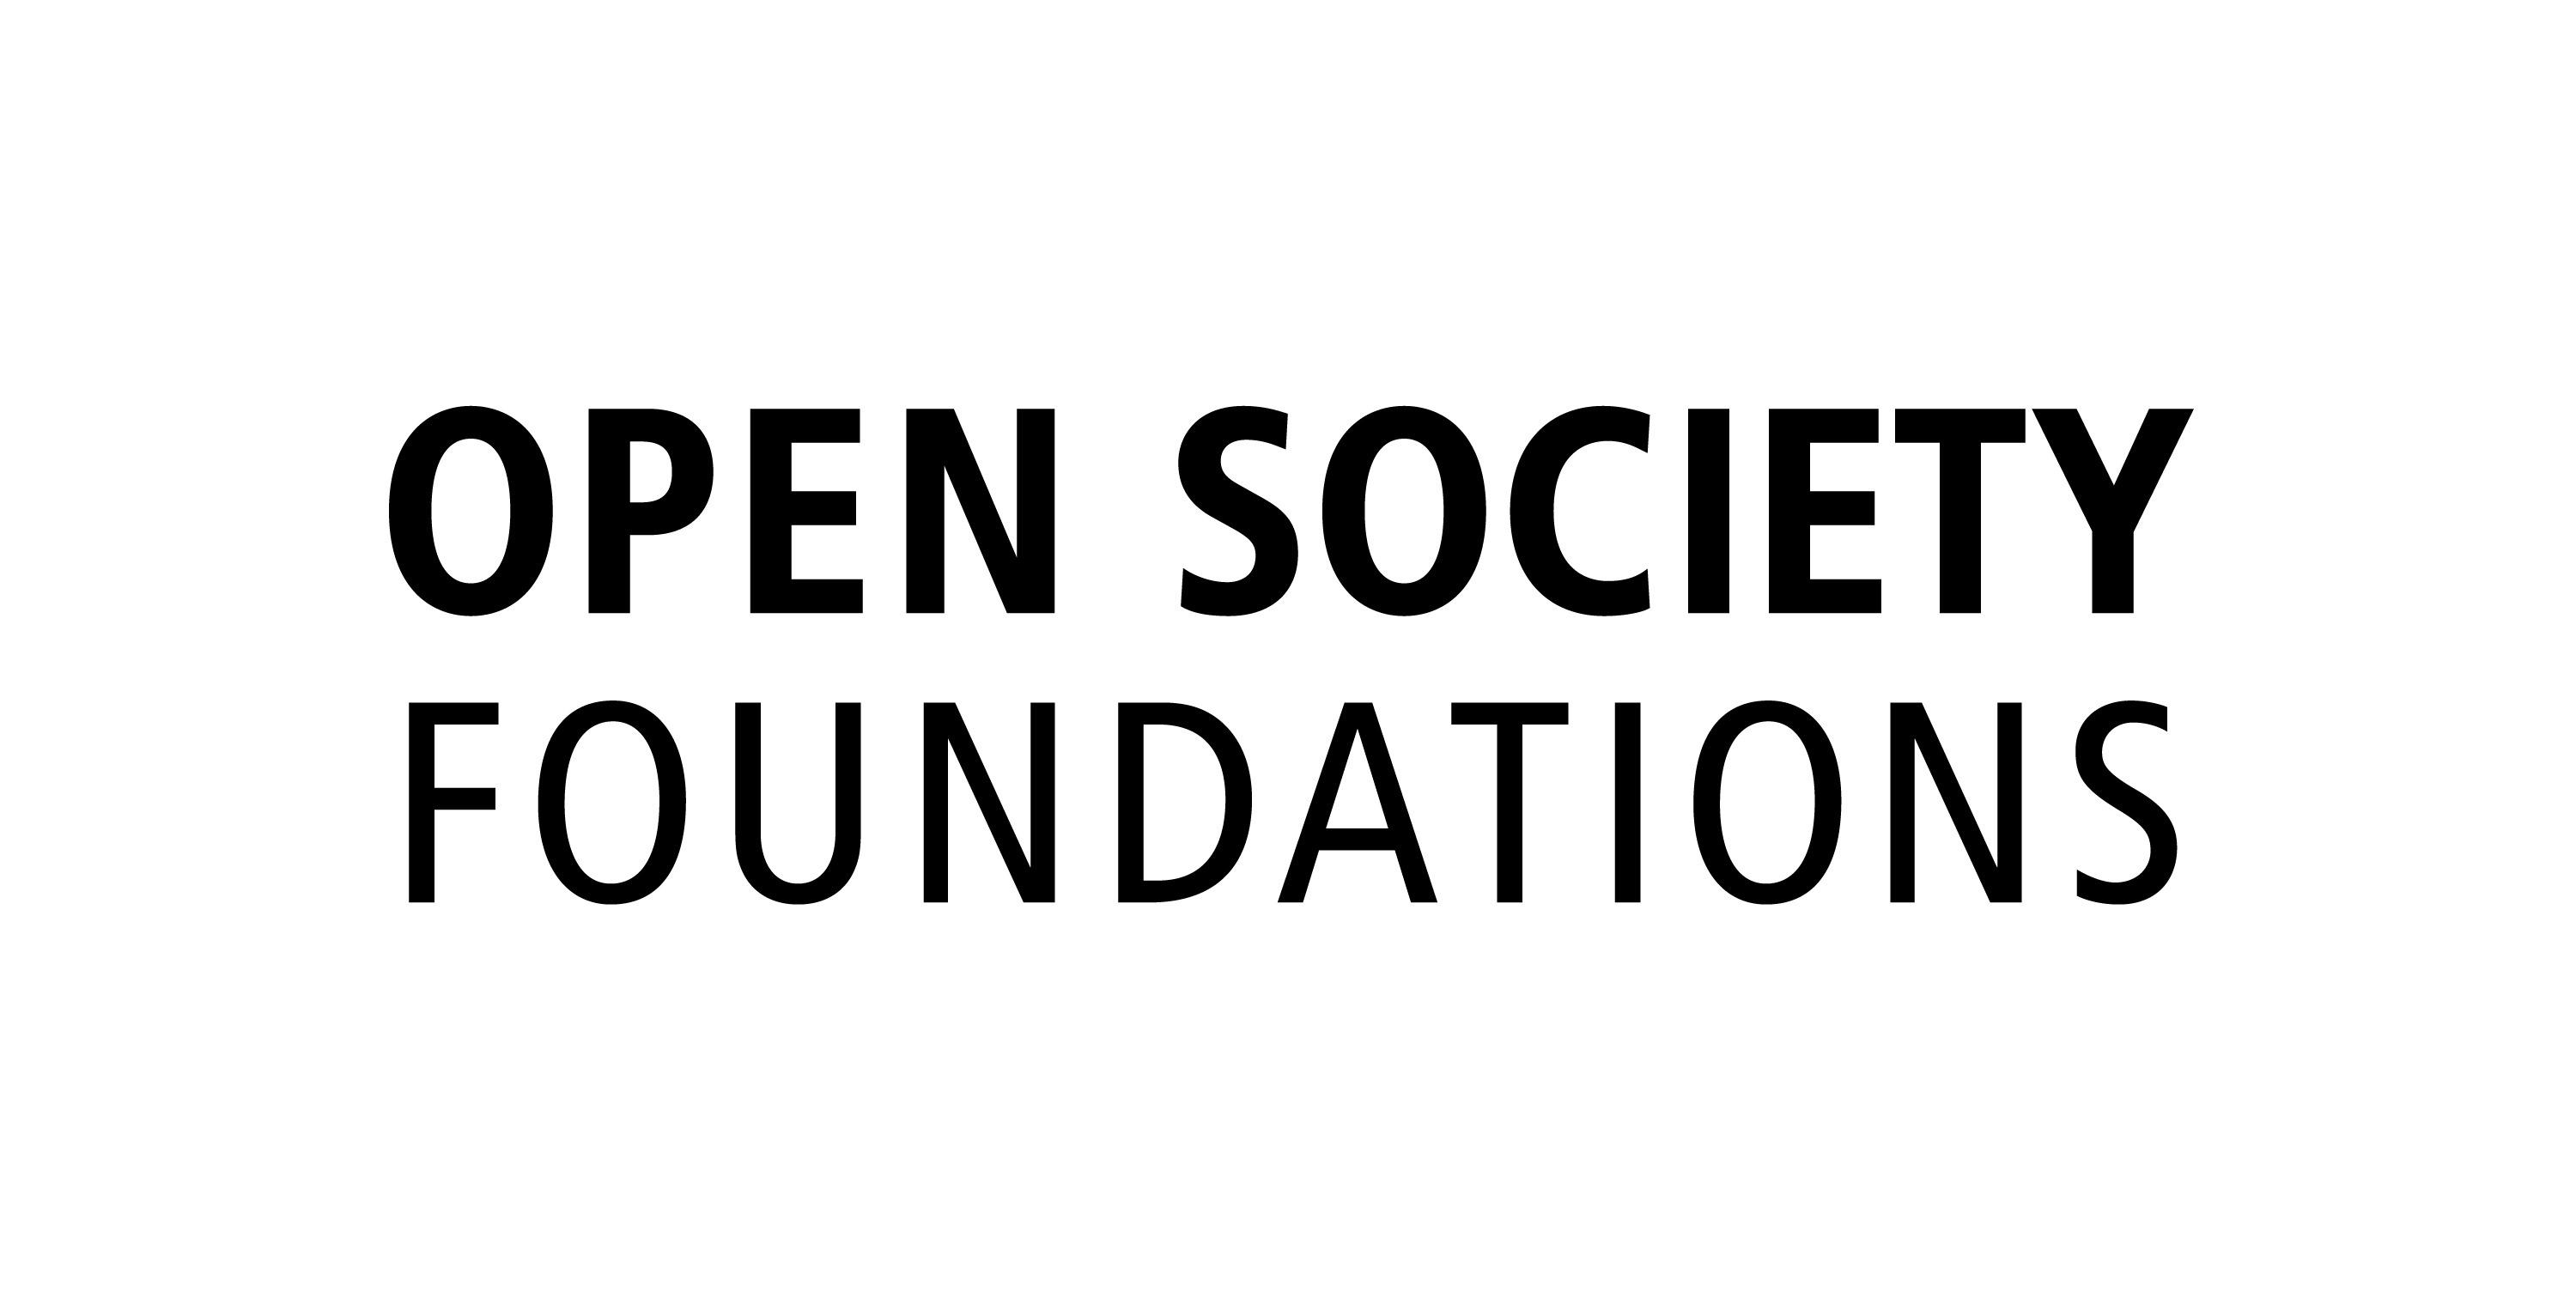 Open society foundations